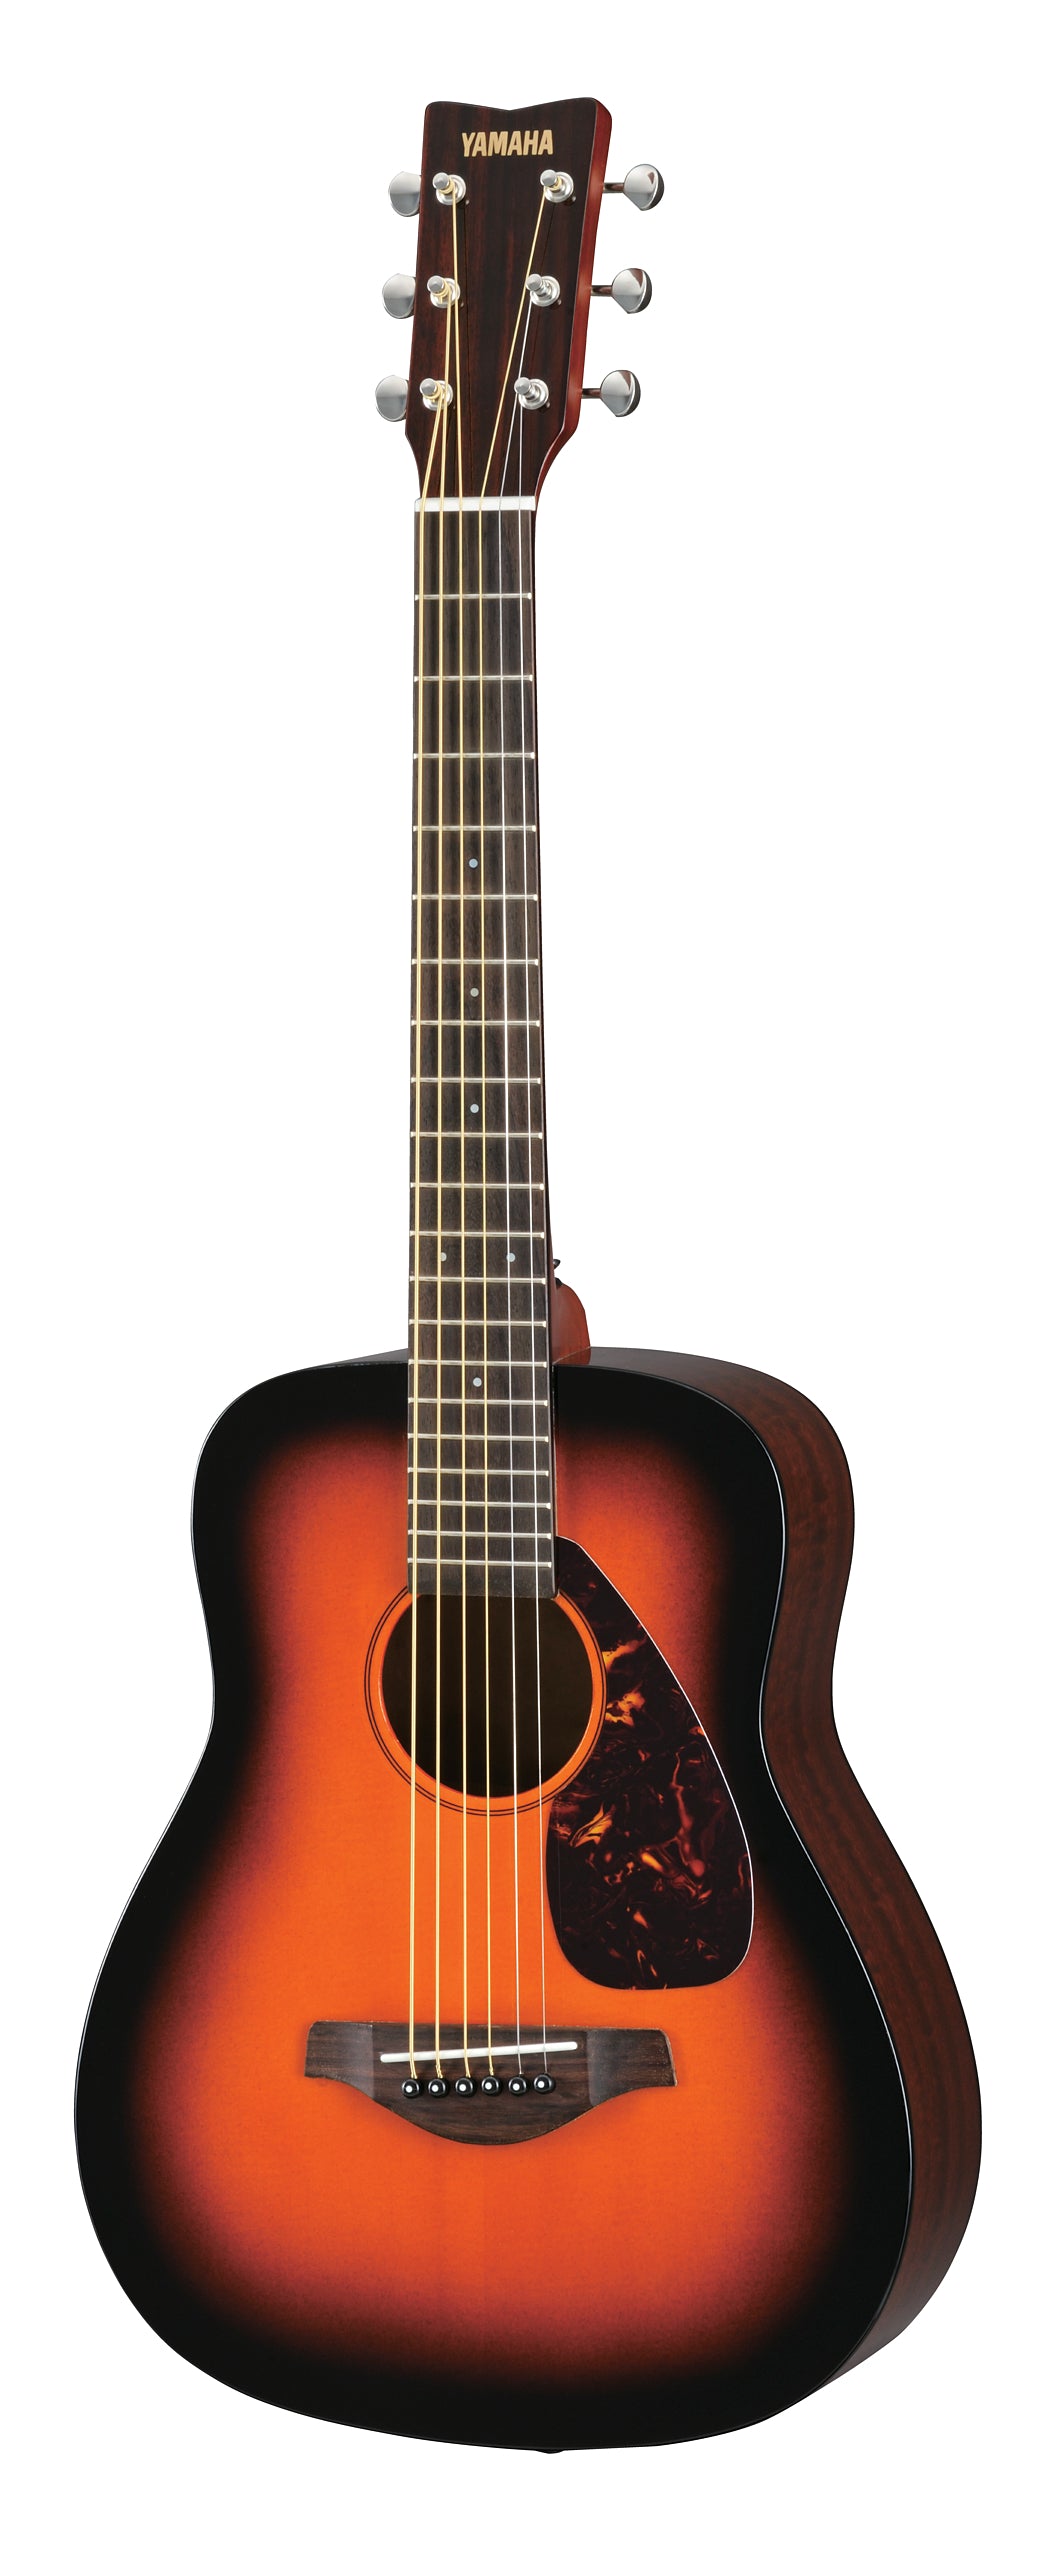 Yamaha JR2S TBS 3/4 Junior Acoustic Guitar c/w Gig Bag - Tobacco Brown Sunbrust